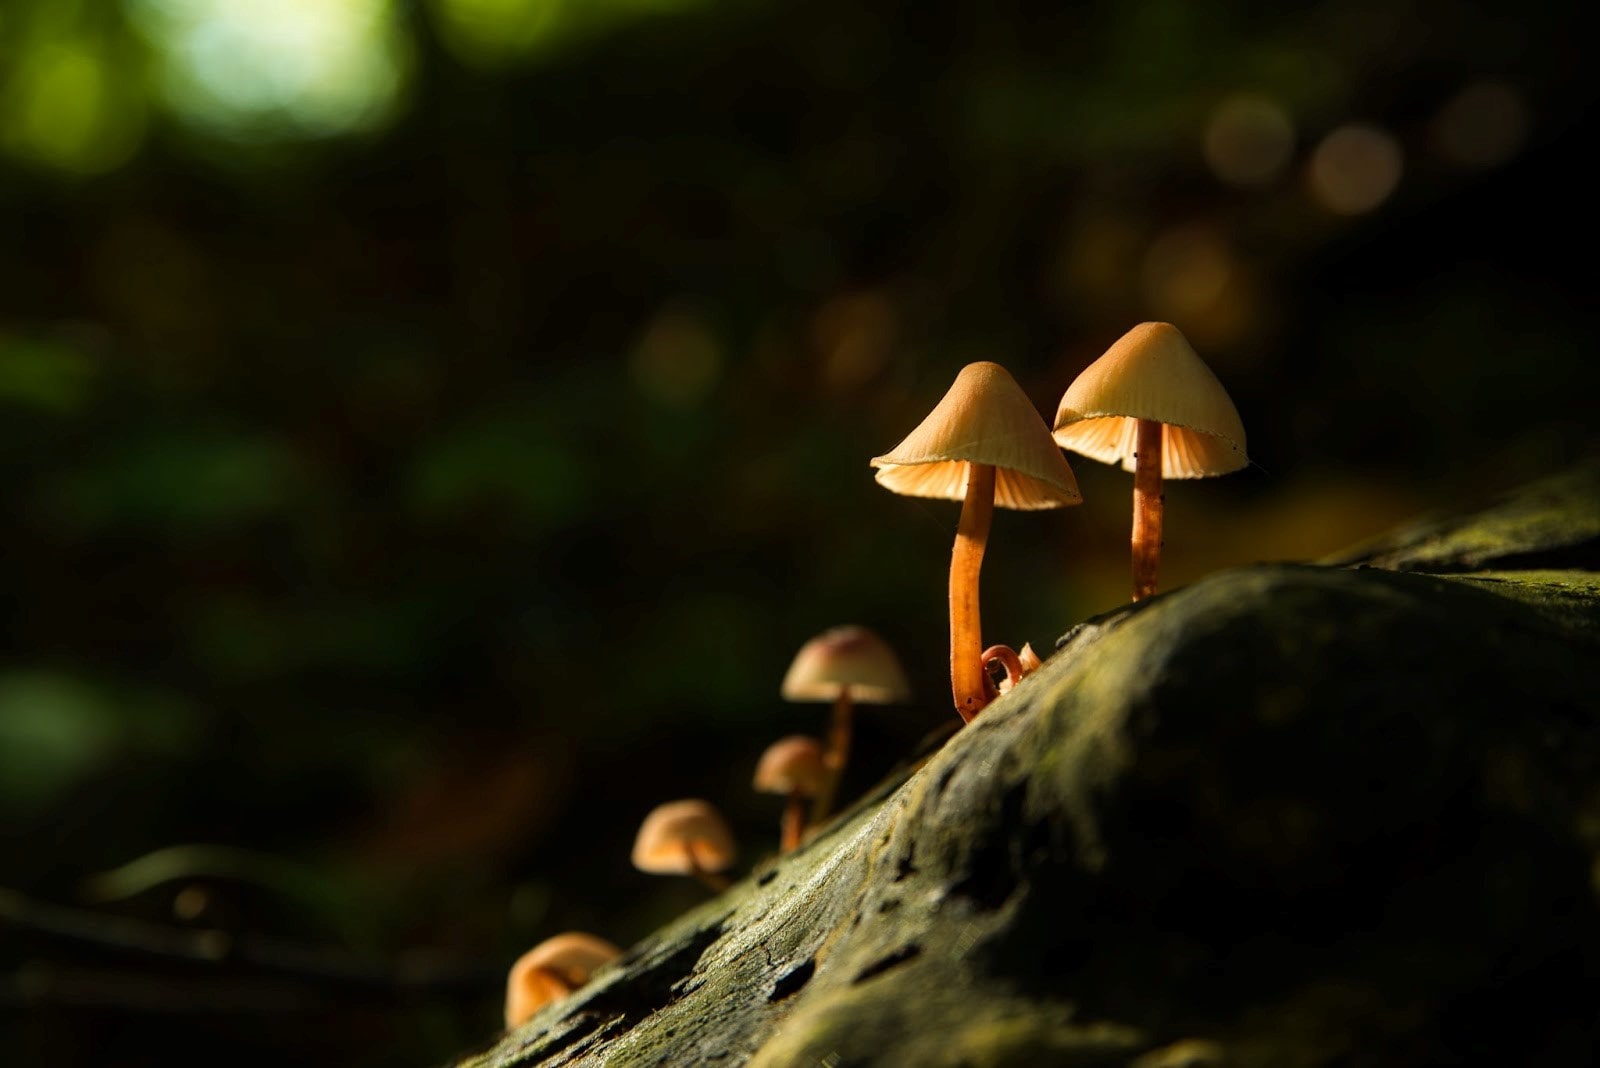 How to grow magic mushrooms